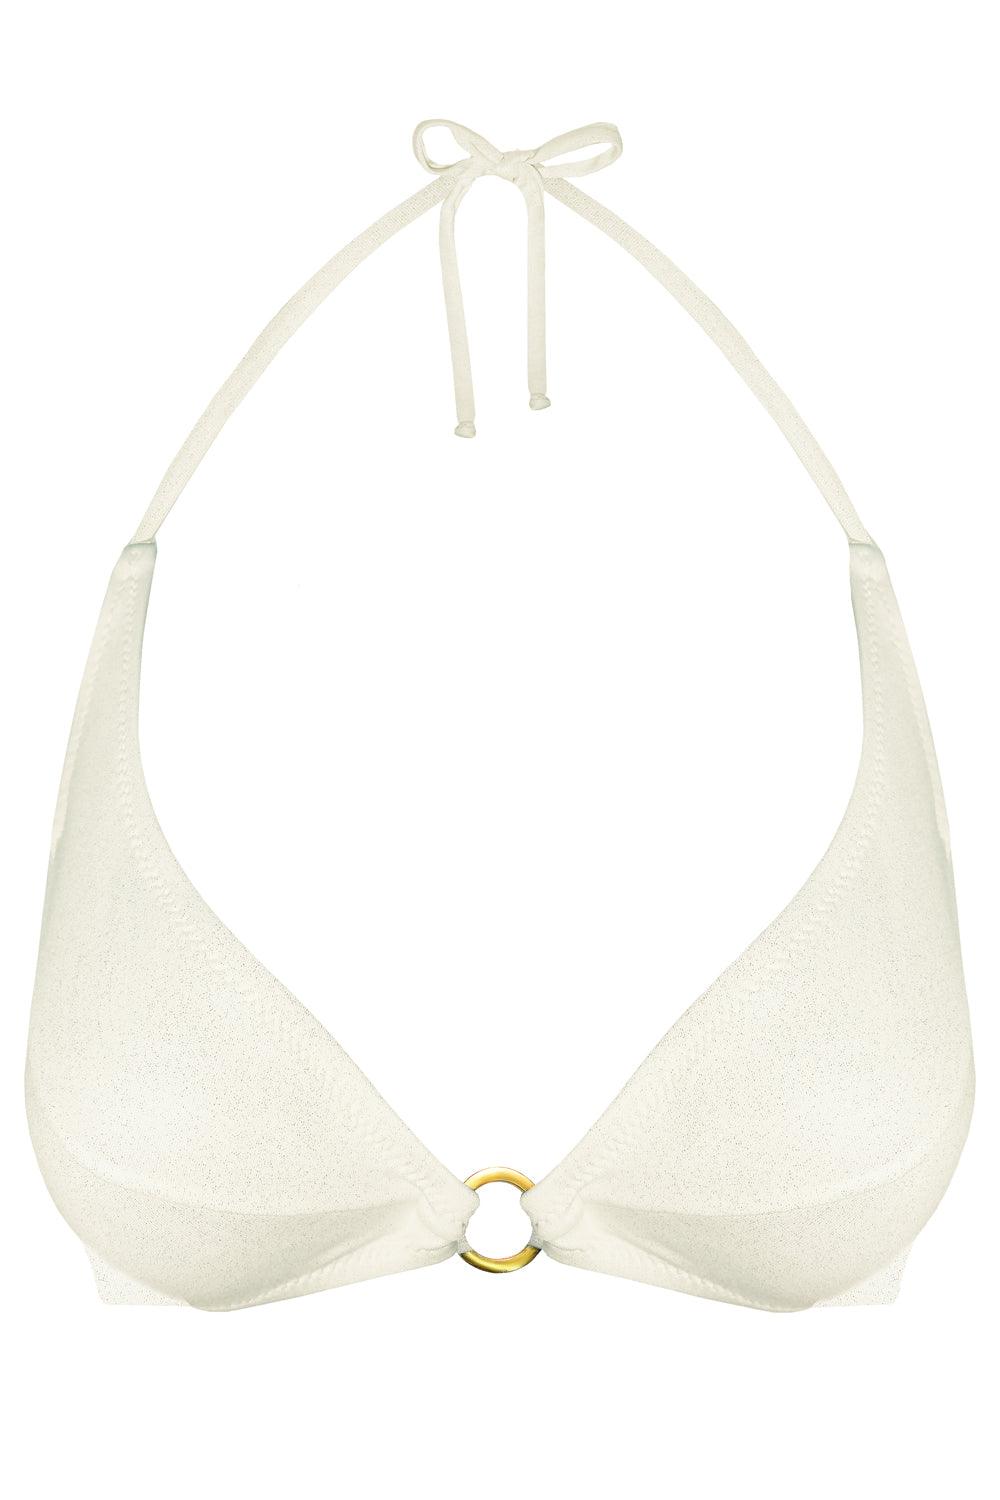 Titaniya Gold Ivory bikini top - Bikini top by yesUndress. Shop on yesUndress